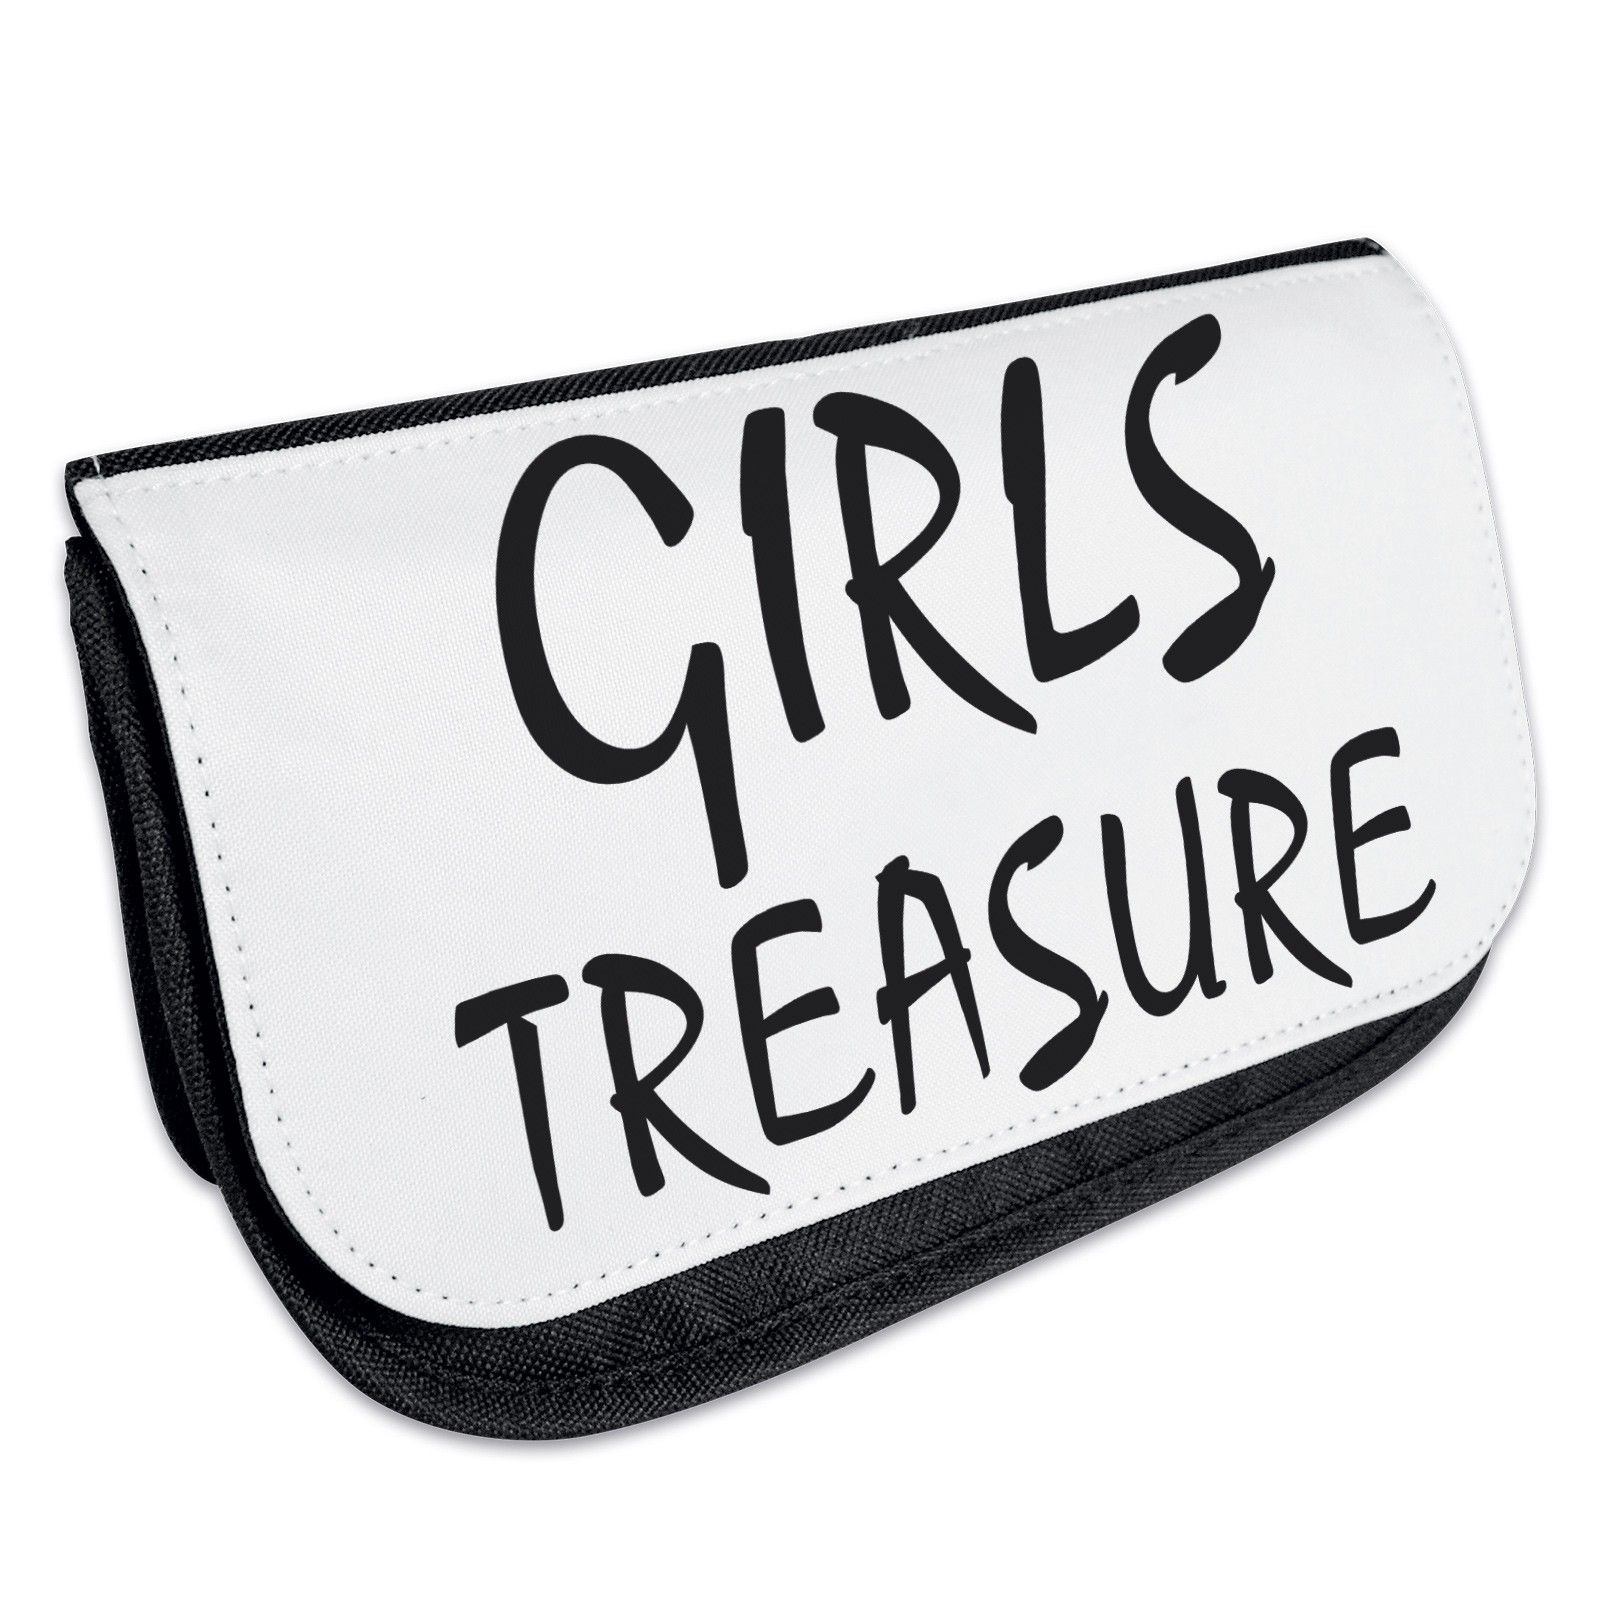 Kosmetiktasche - Kulturbeutel - Schminktasche Modell: Girls Treasure